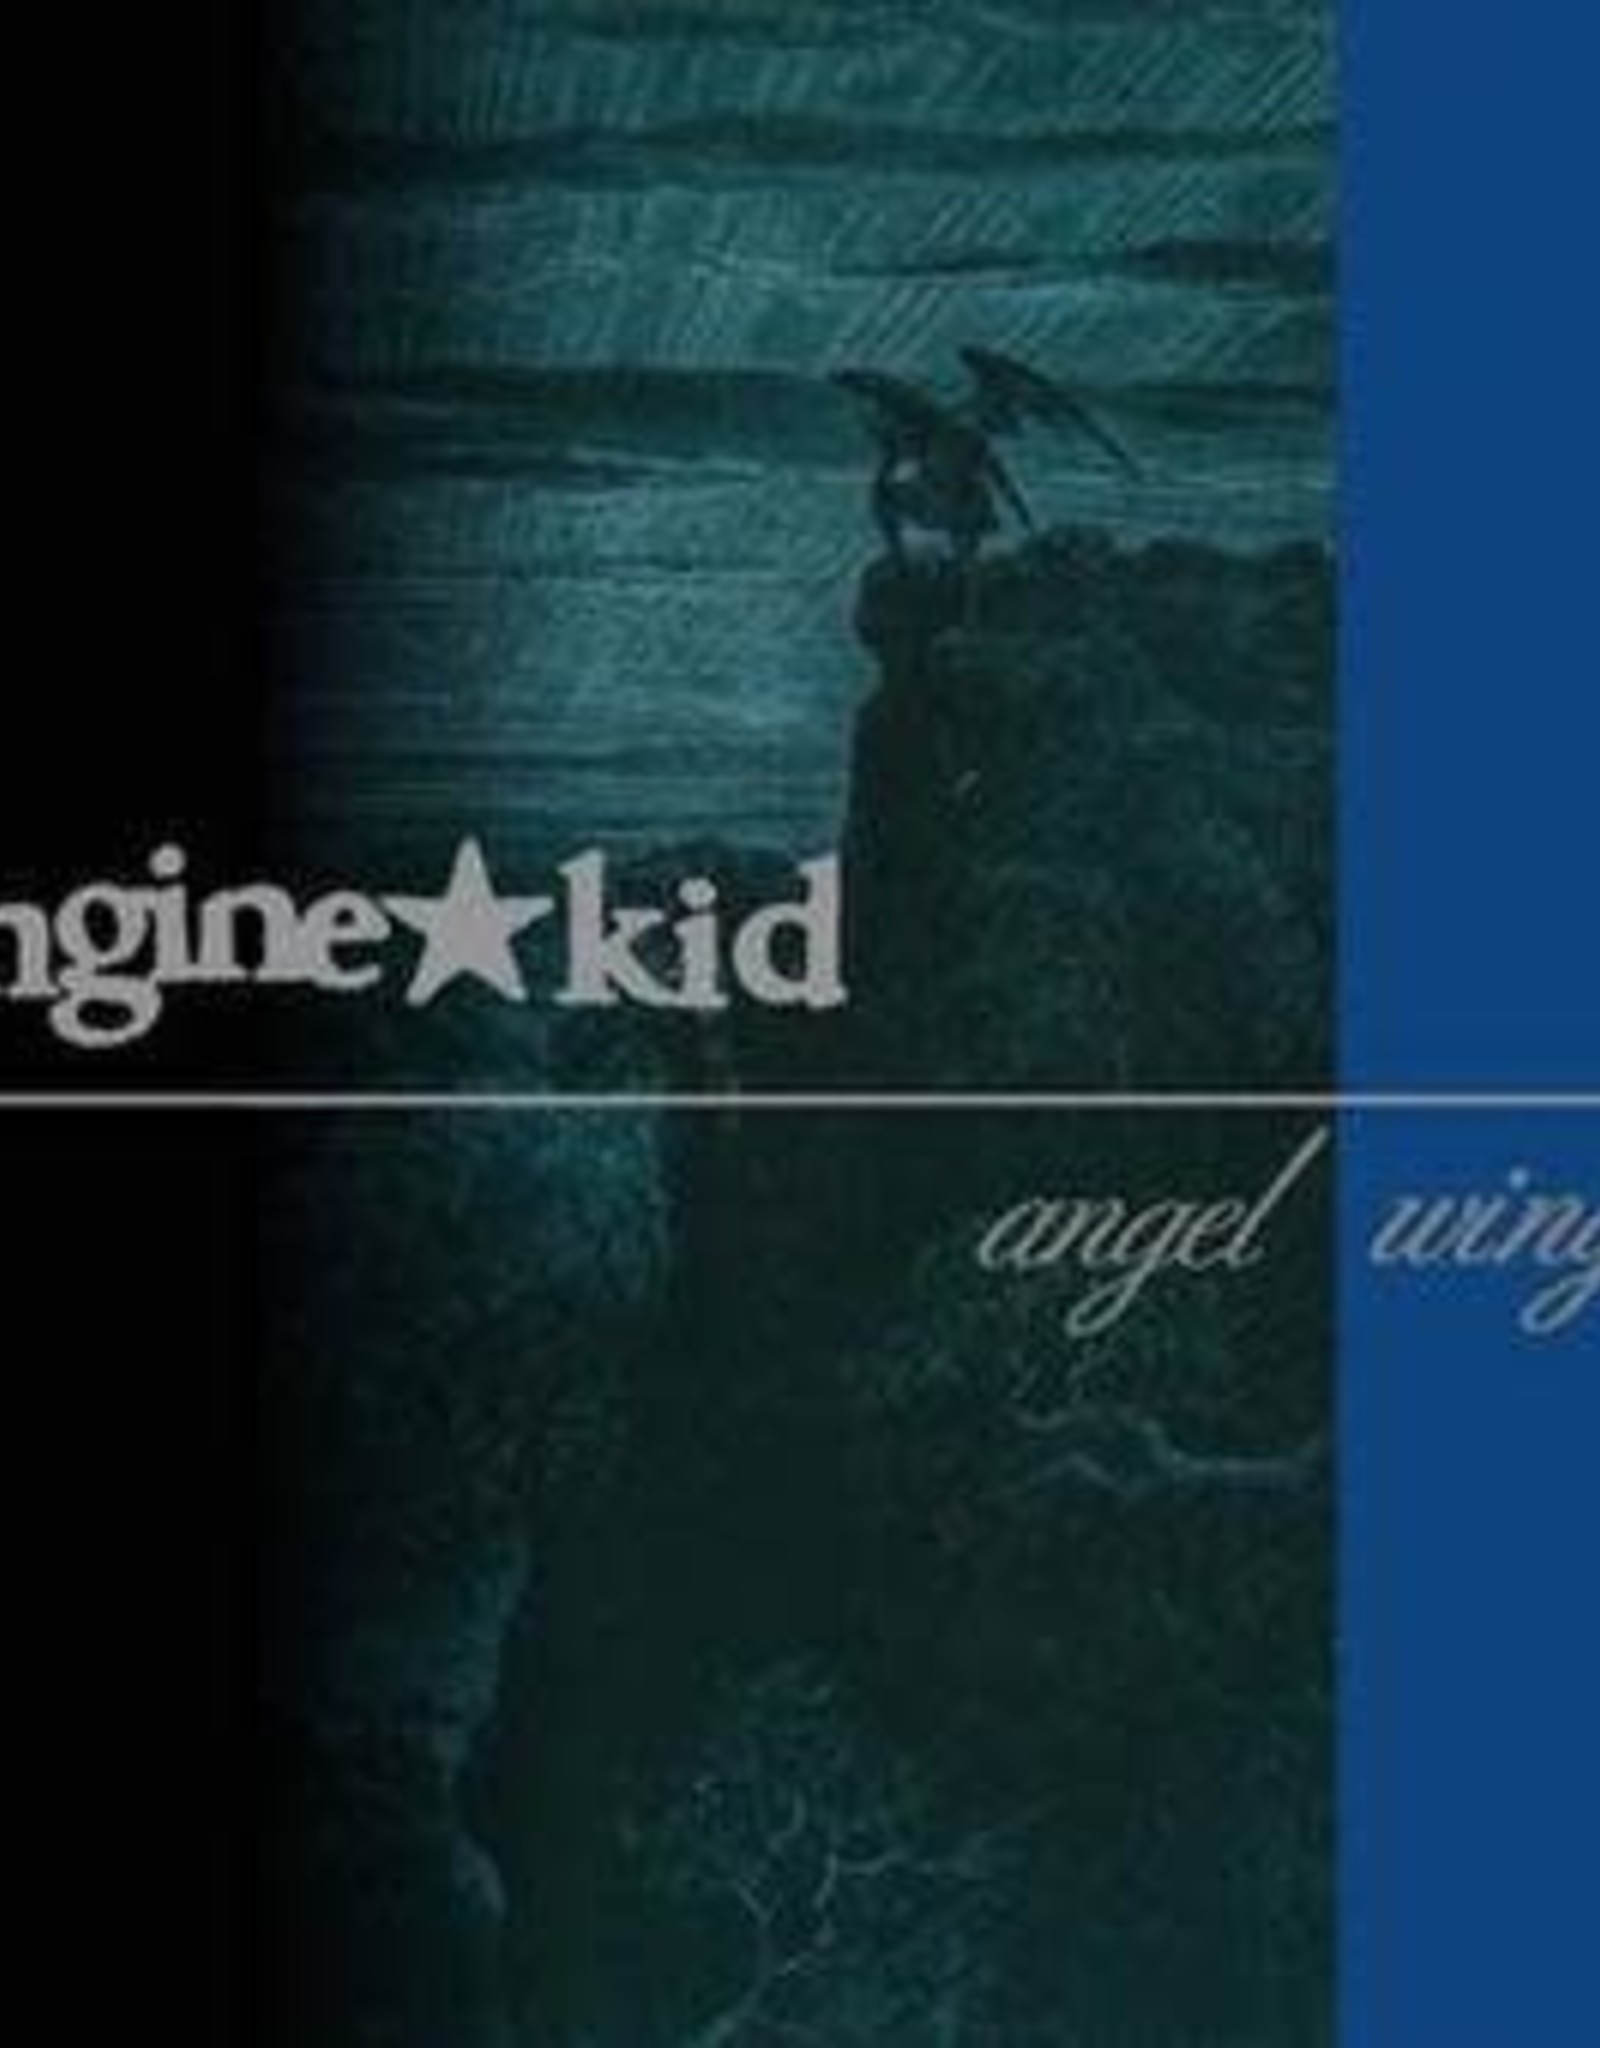 Engine Kid - Angel Wings + 2021 Flexi (RSDBF 2022)